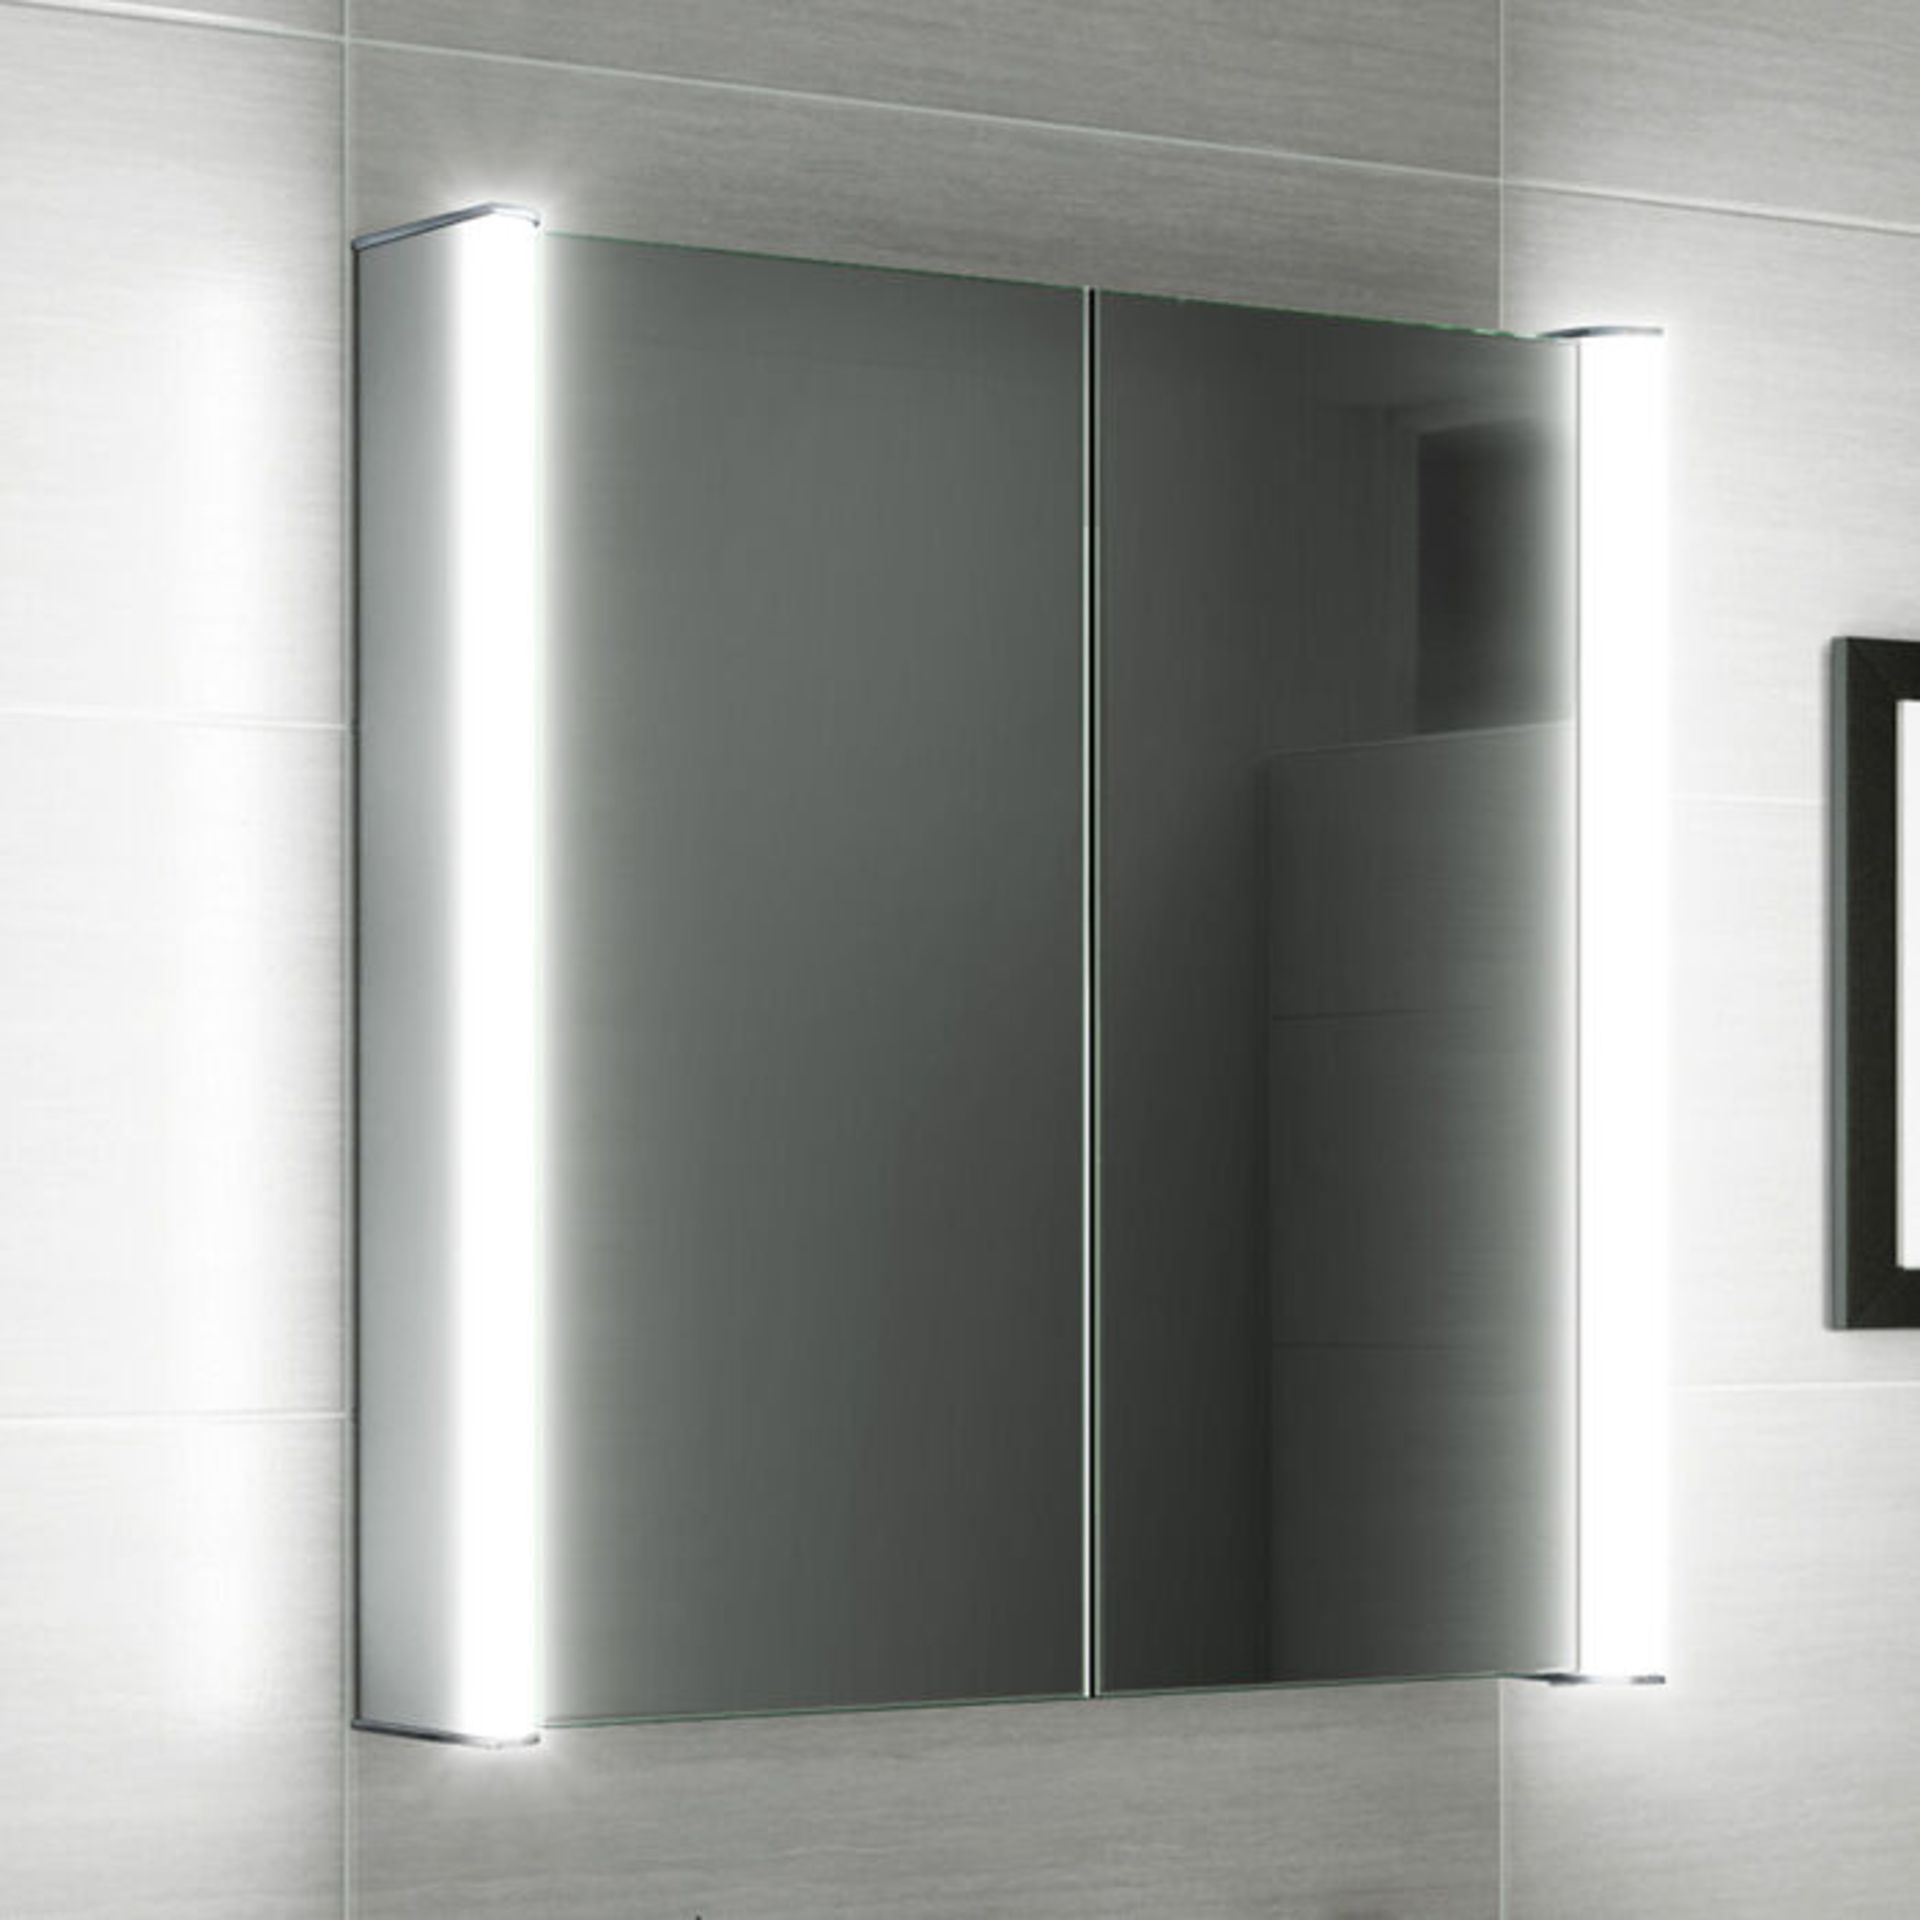 (G33) 600x650mm Luminaire Illuminated LED Mirror Cabinet - Bluetooth Speaker & Shaver Socket. R... - Image 2 of 3